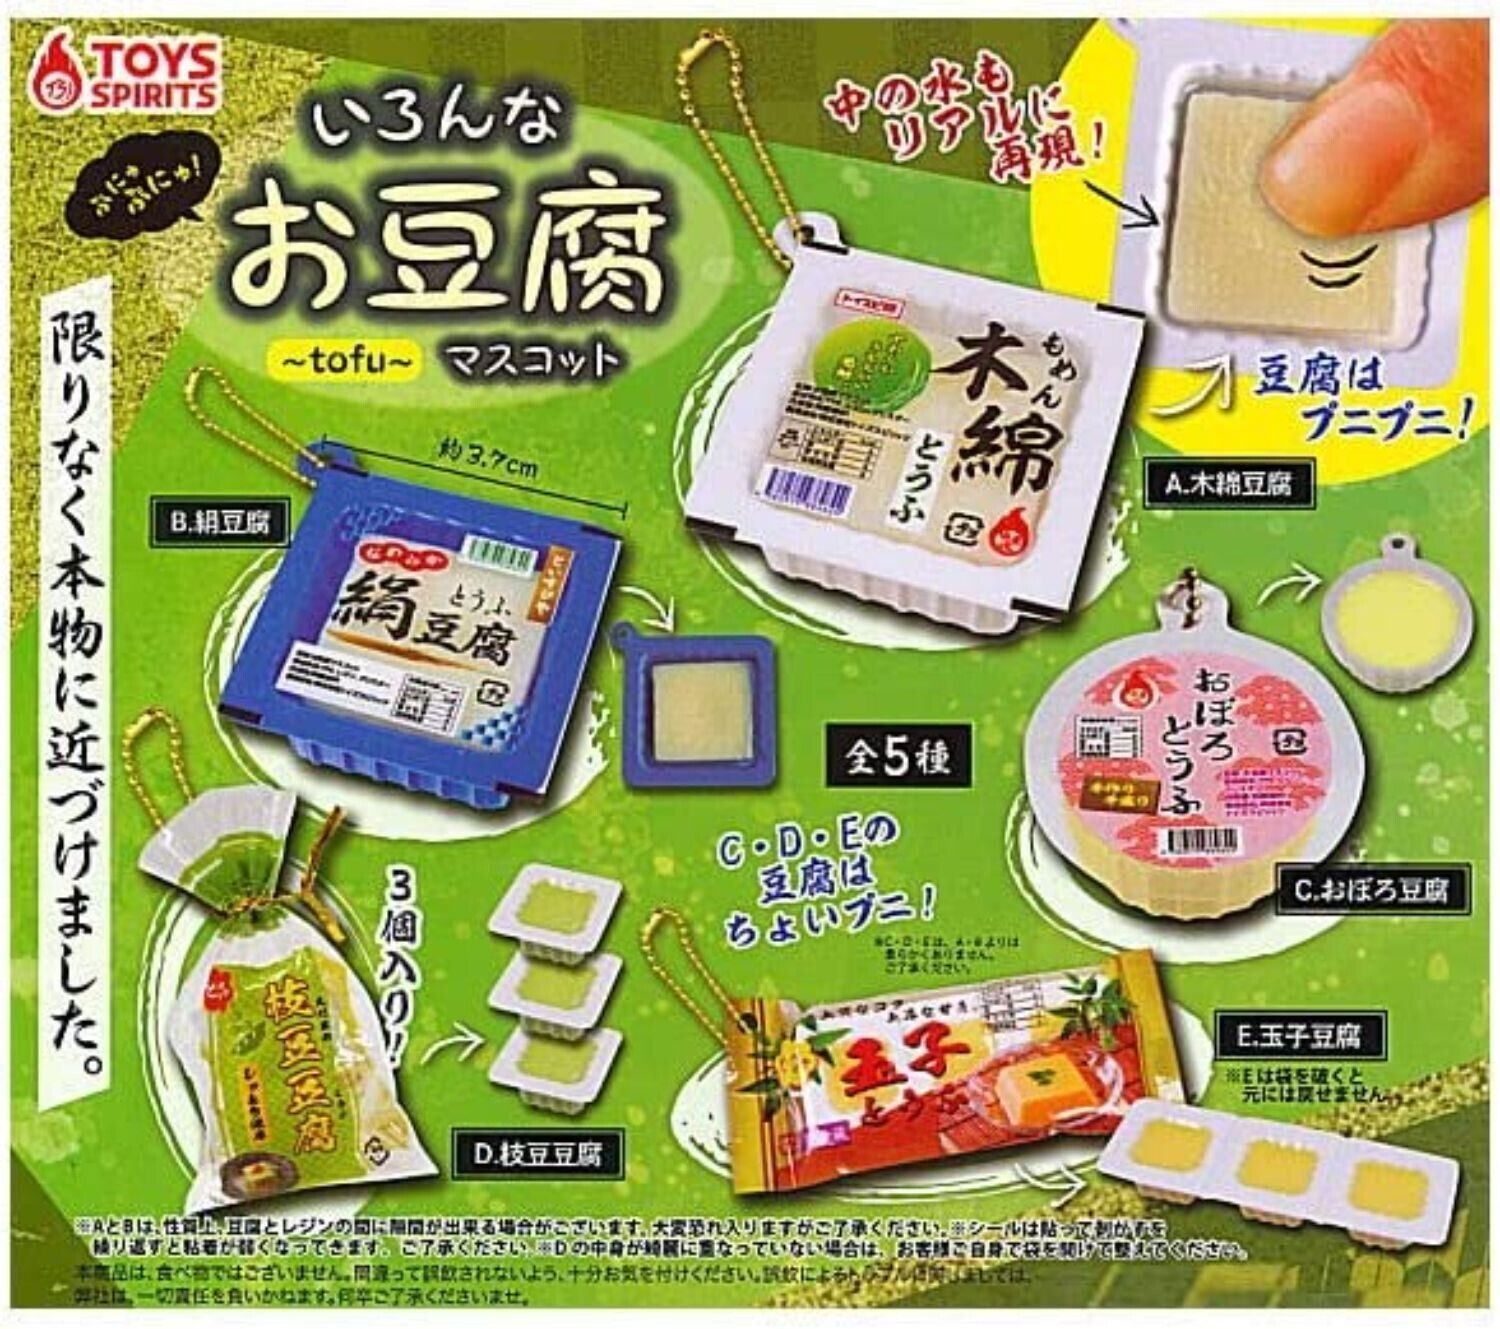 Punyupunyu Various Tofu mascot Capsule Toy 5 Types Full Comp Set Gacha New